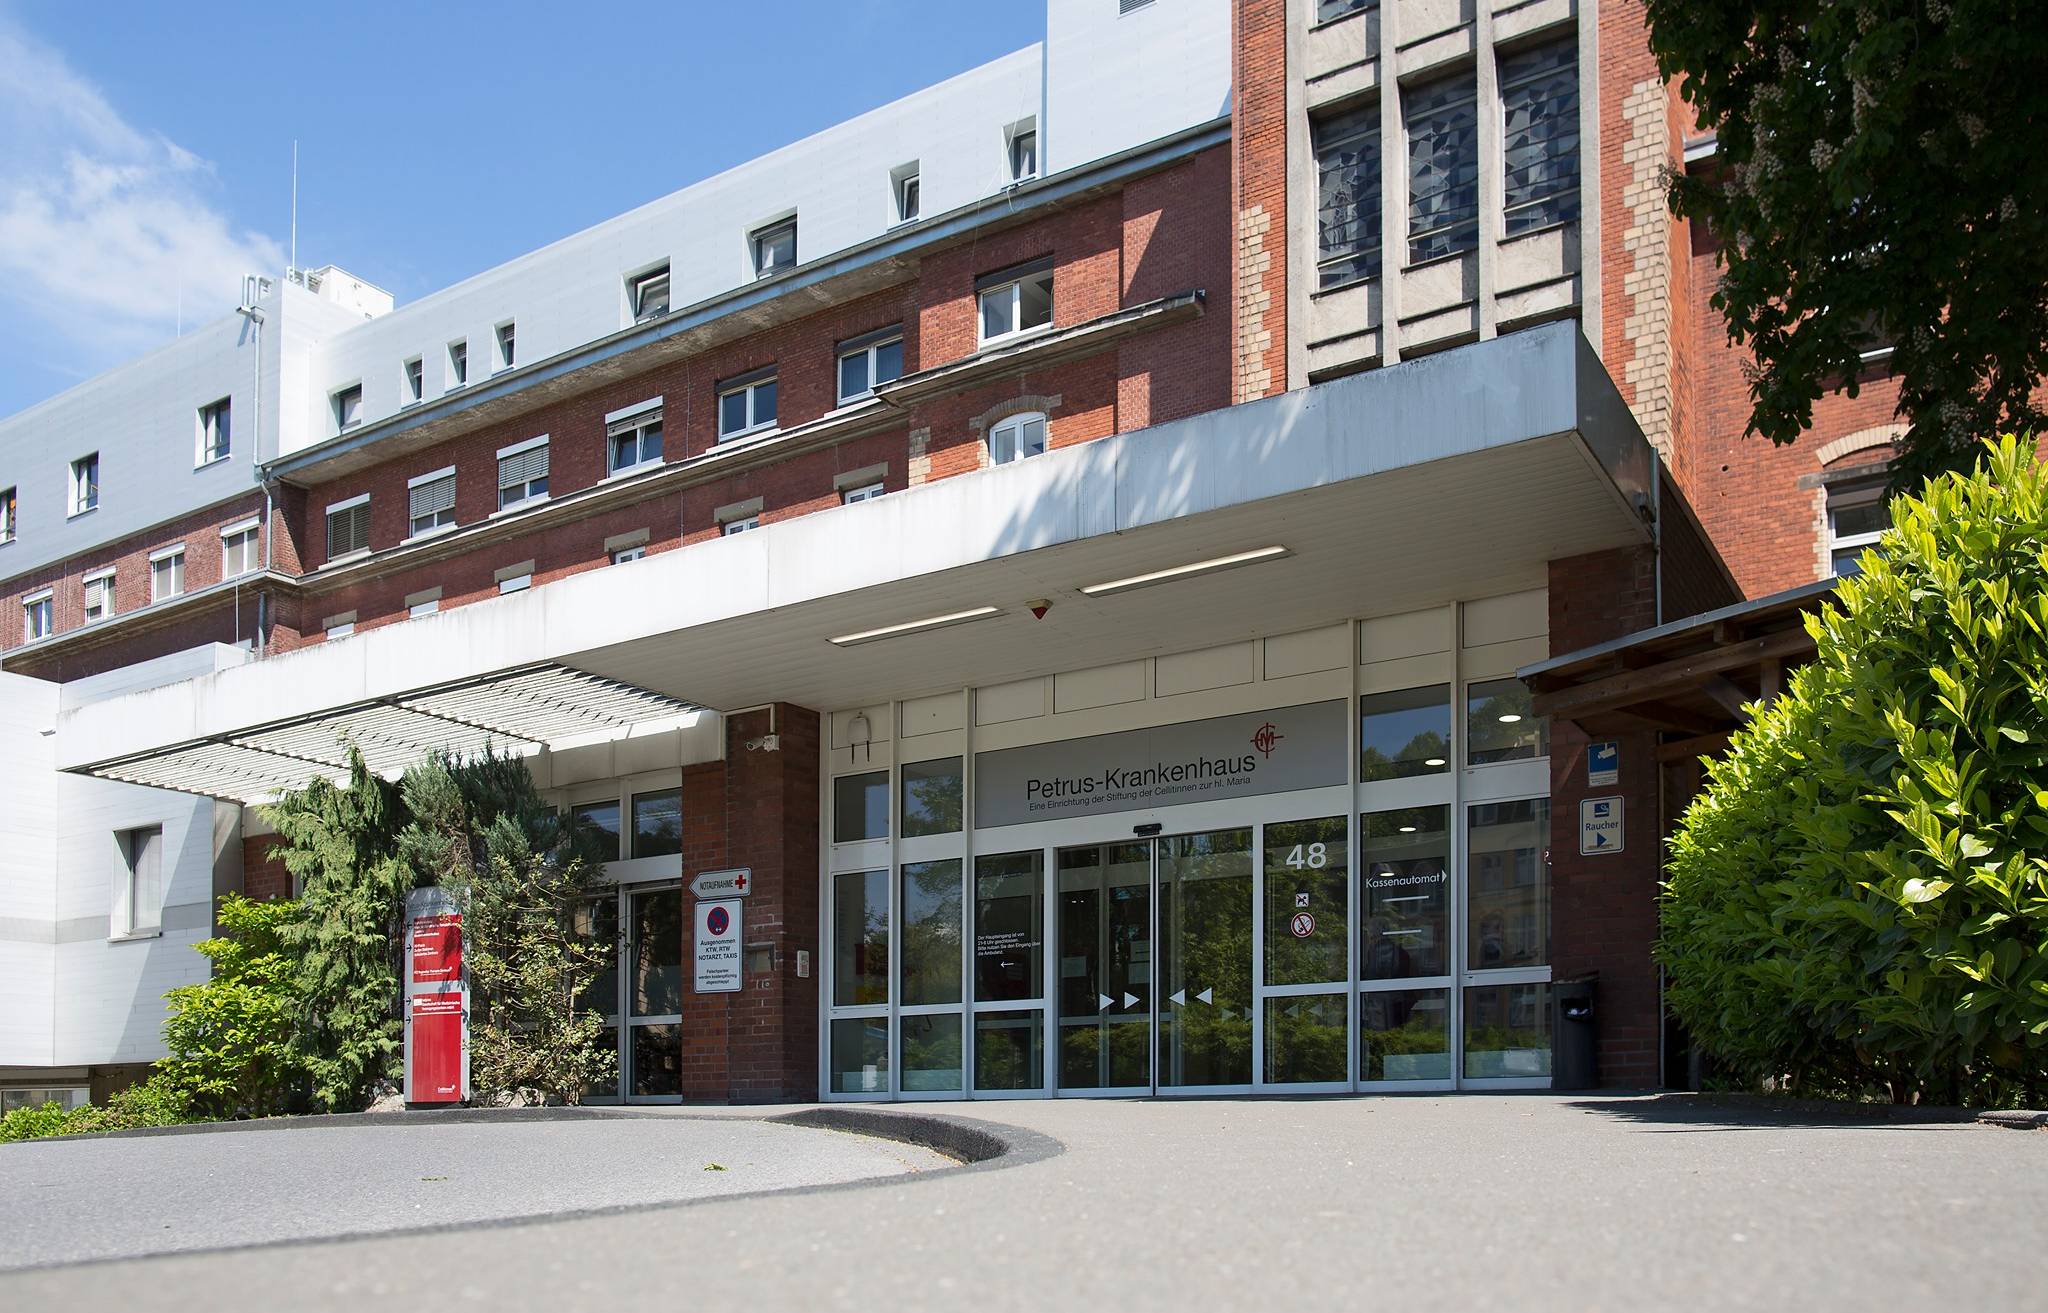 Klinik für Onkologie zieht von Petrus-Klinik ins Krankenhaus St. Josef